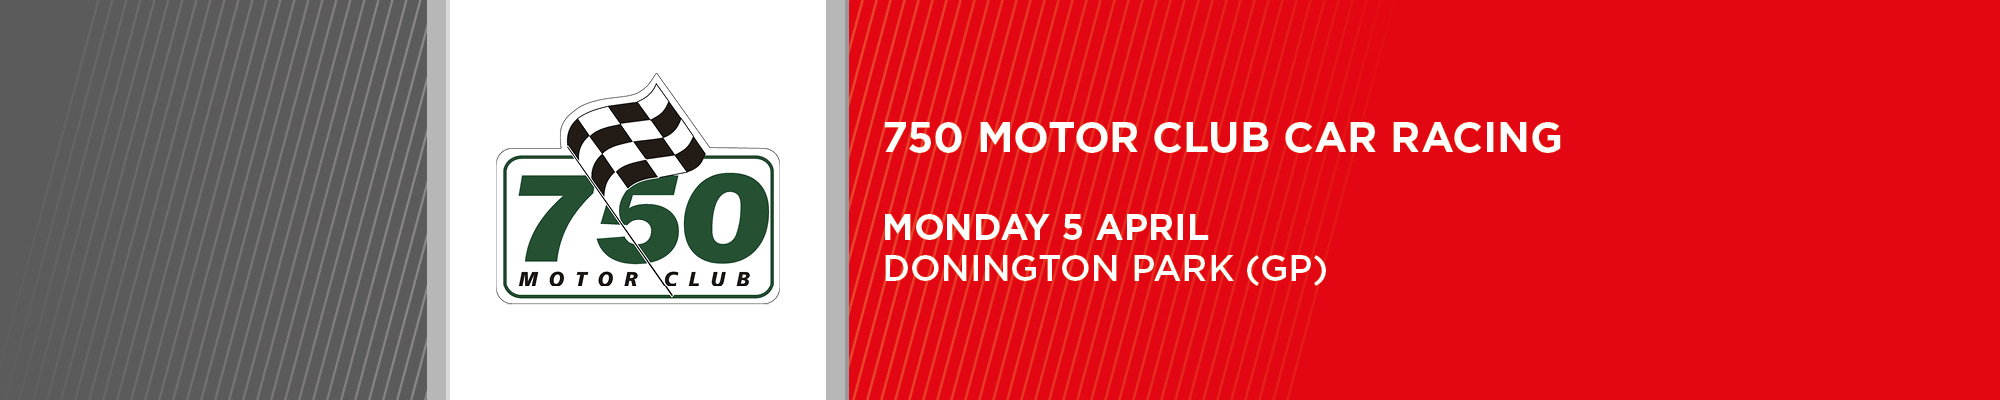  750 Motor Club Championships - NO SPECTATORS